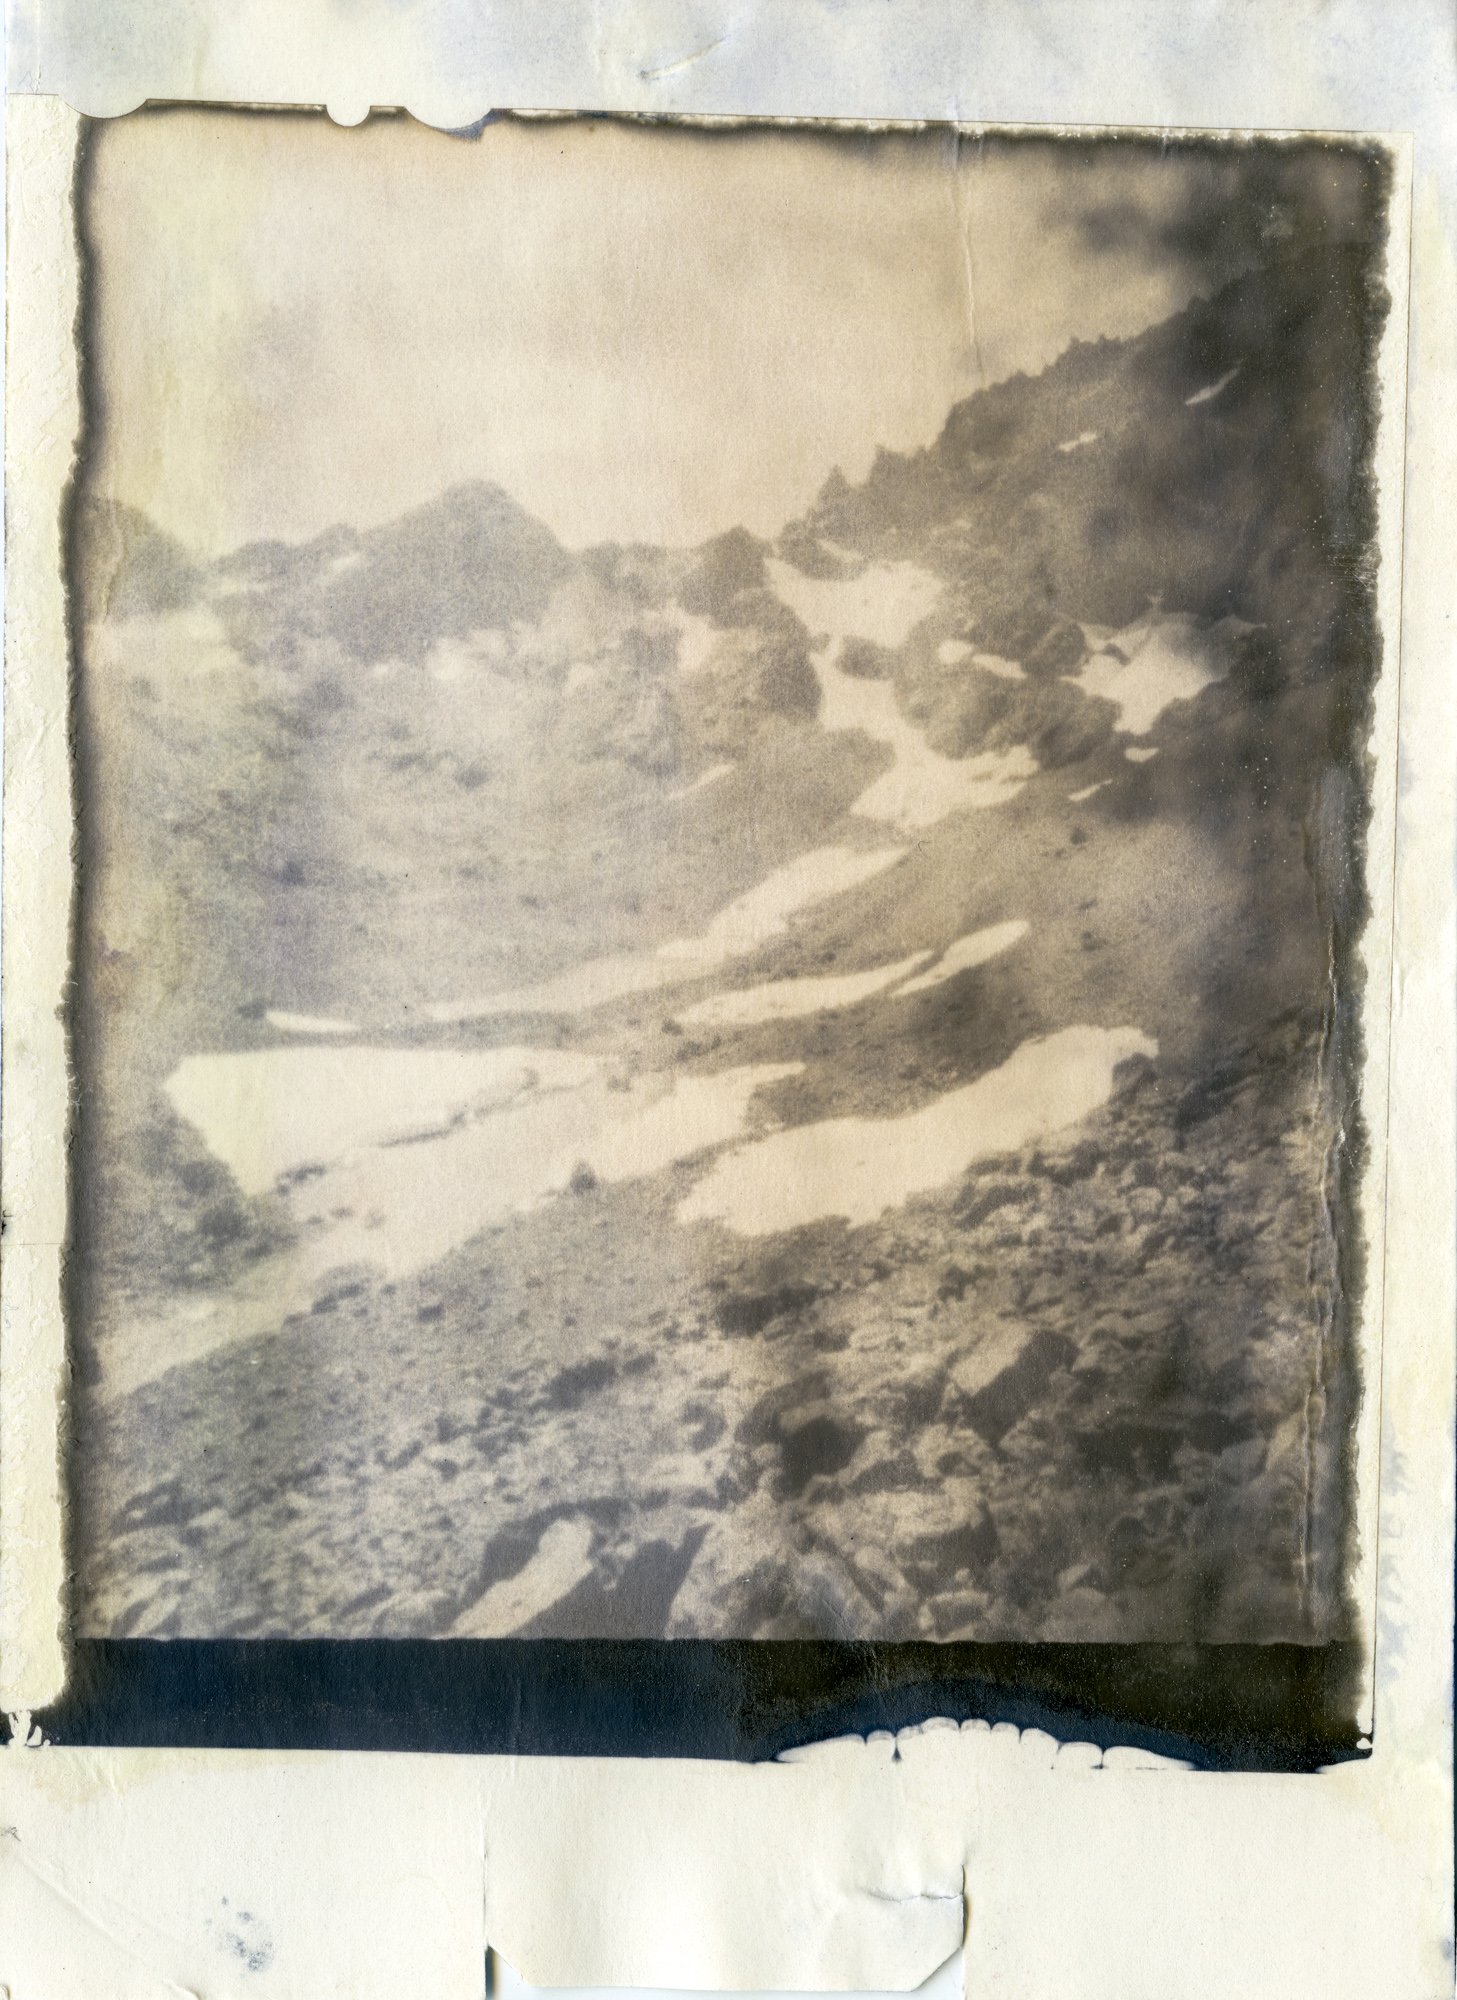 royal glacier, type 55 film, pinhole